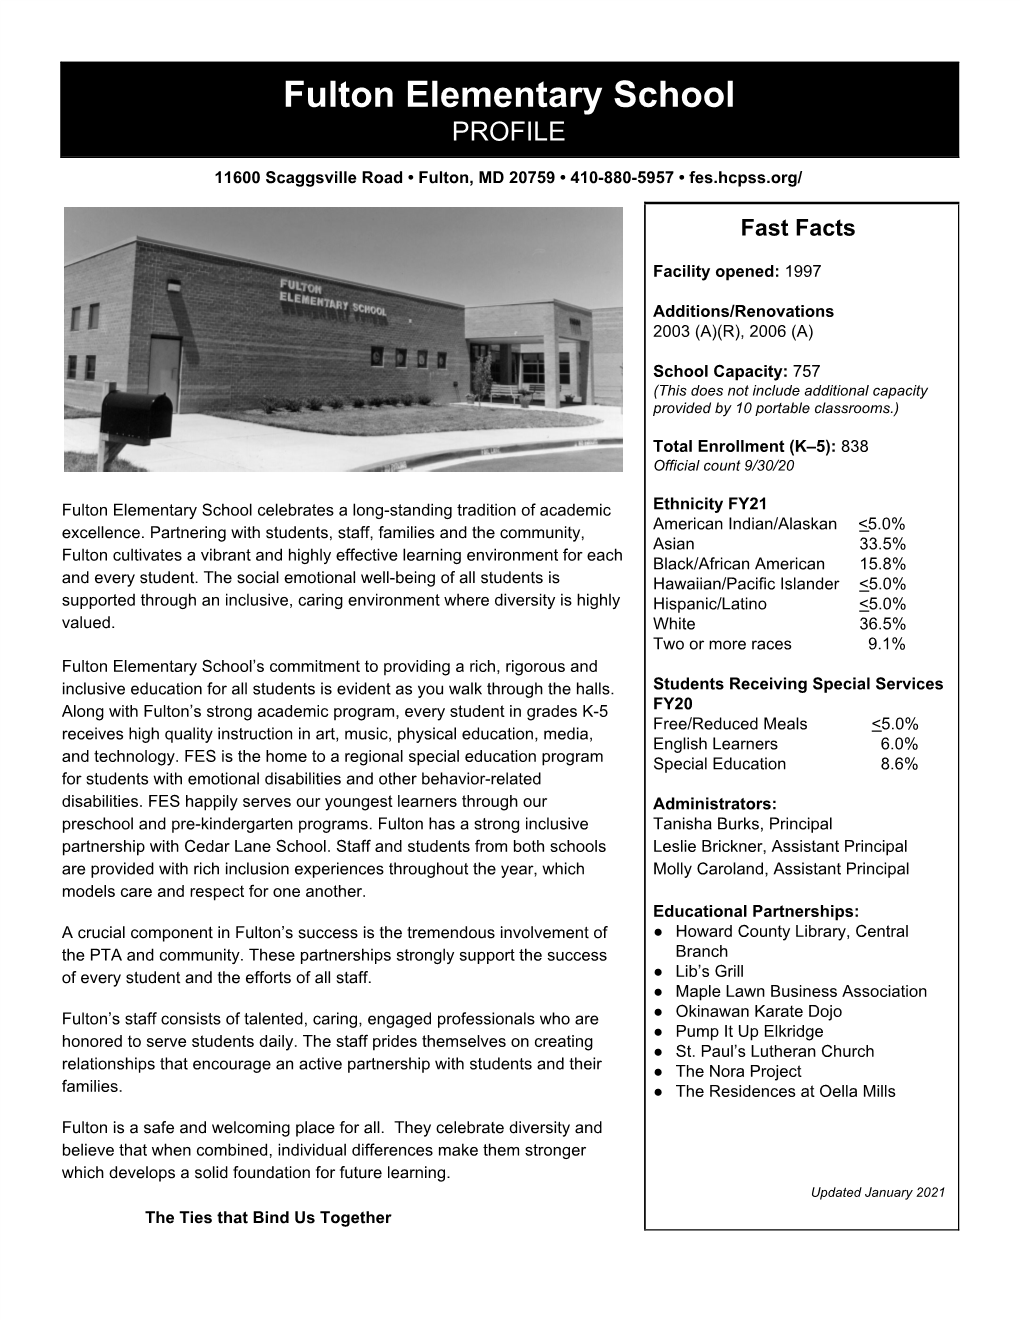 2021 Fulton Elementary School Profile